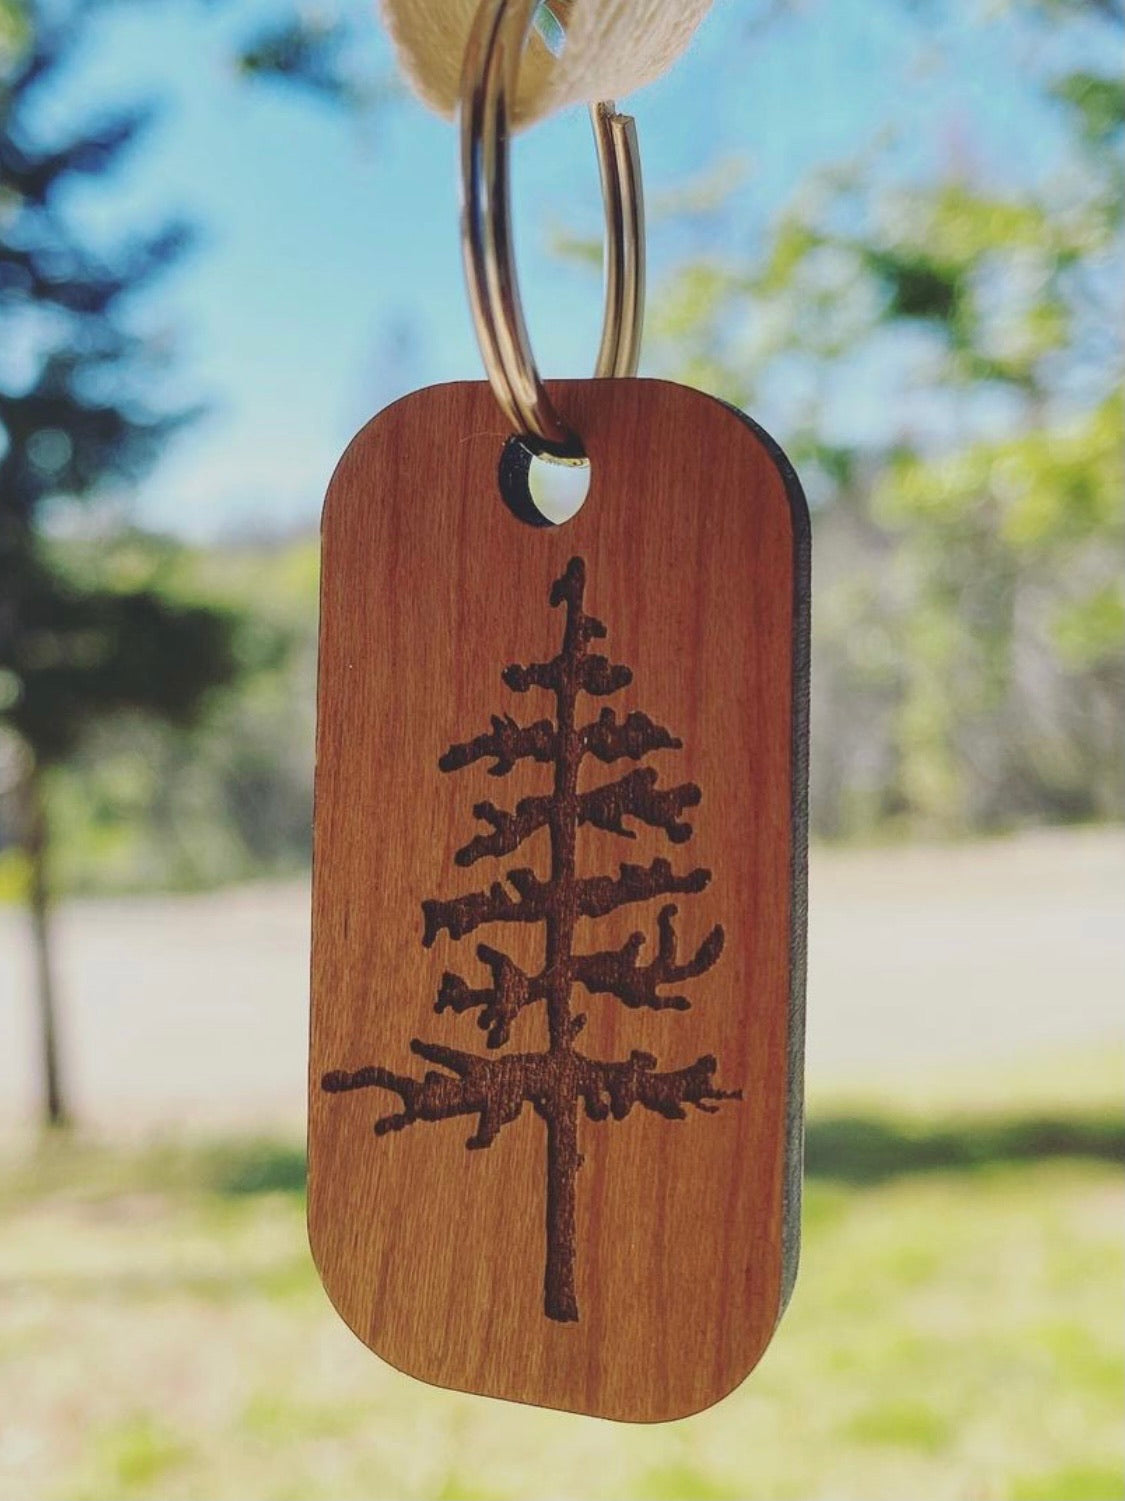 Pine Tree Keychain